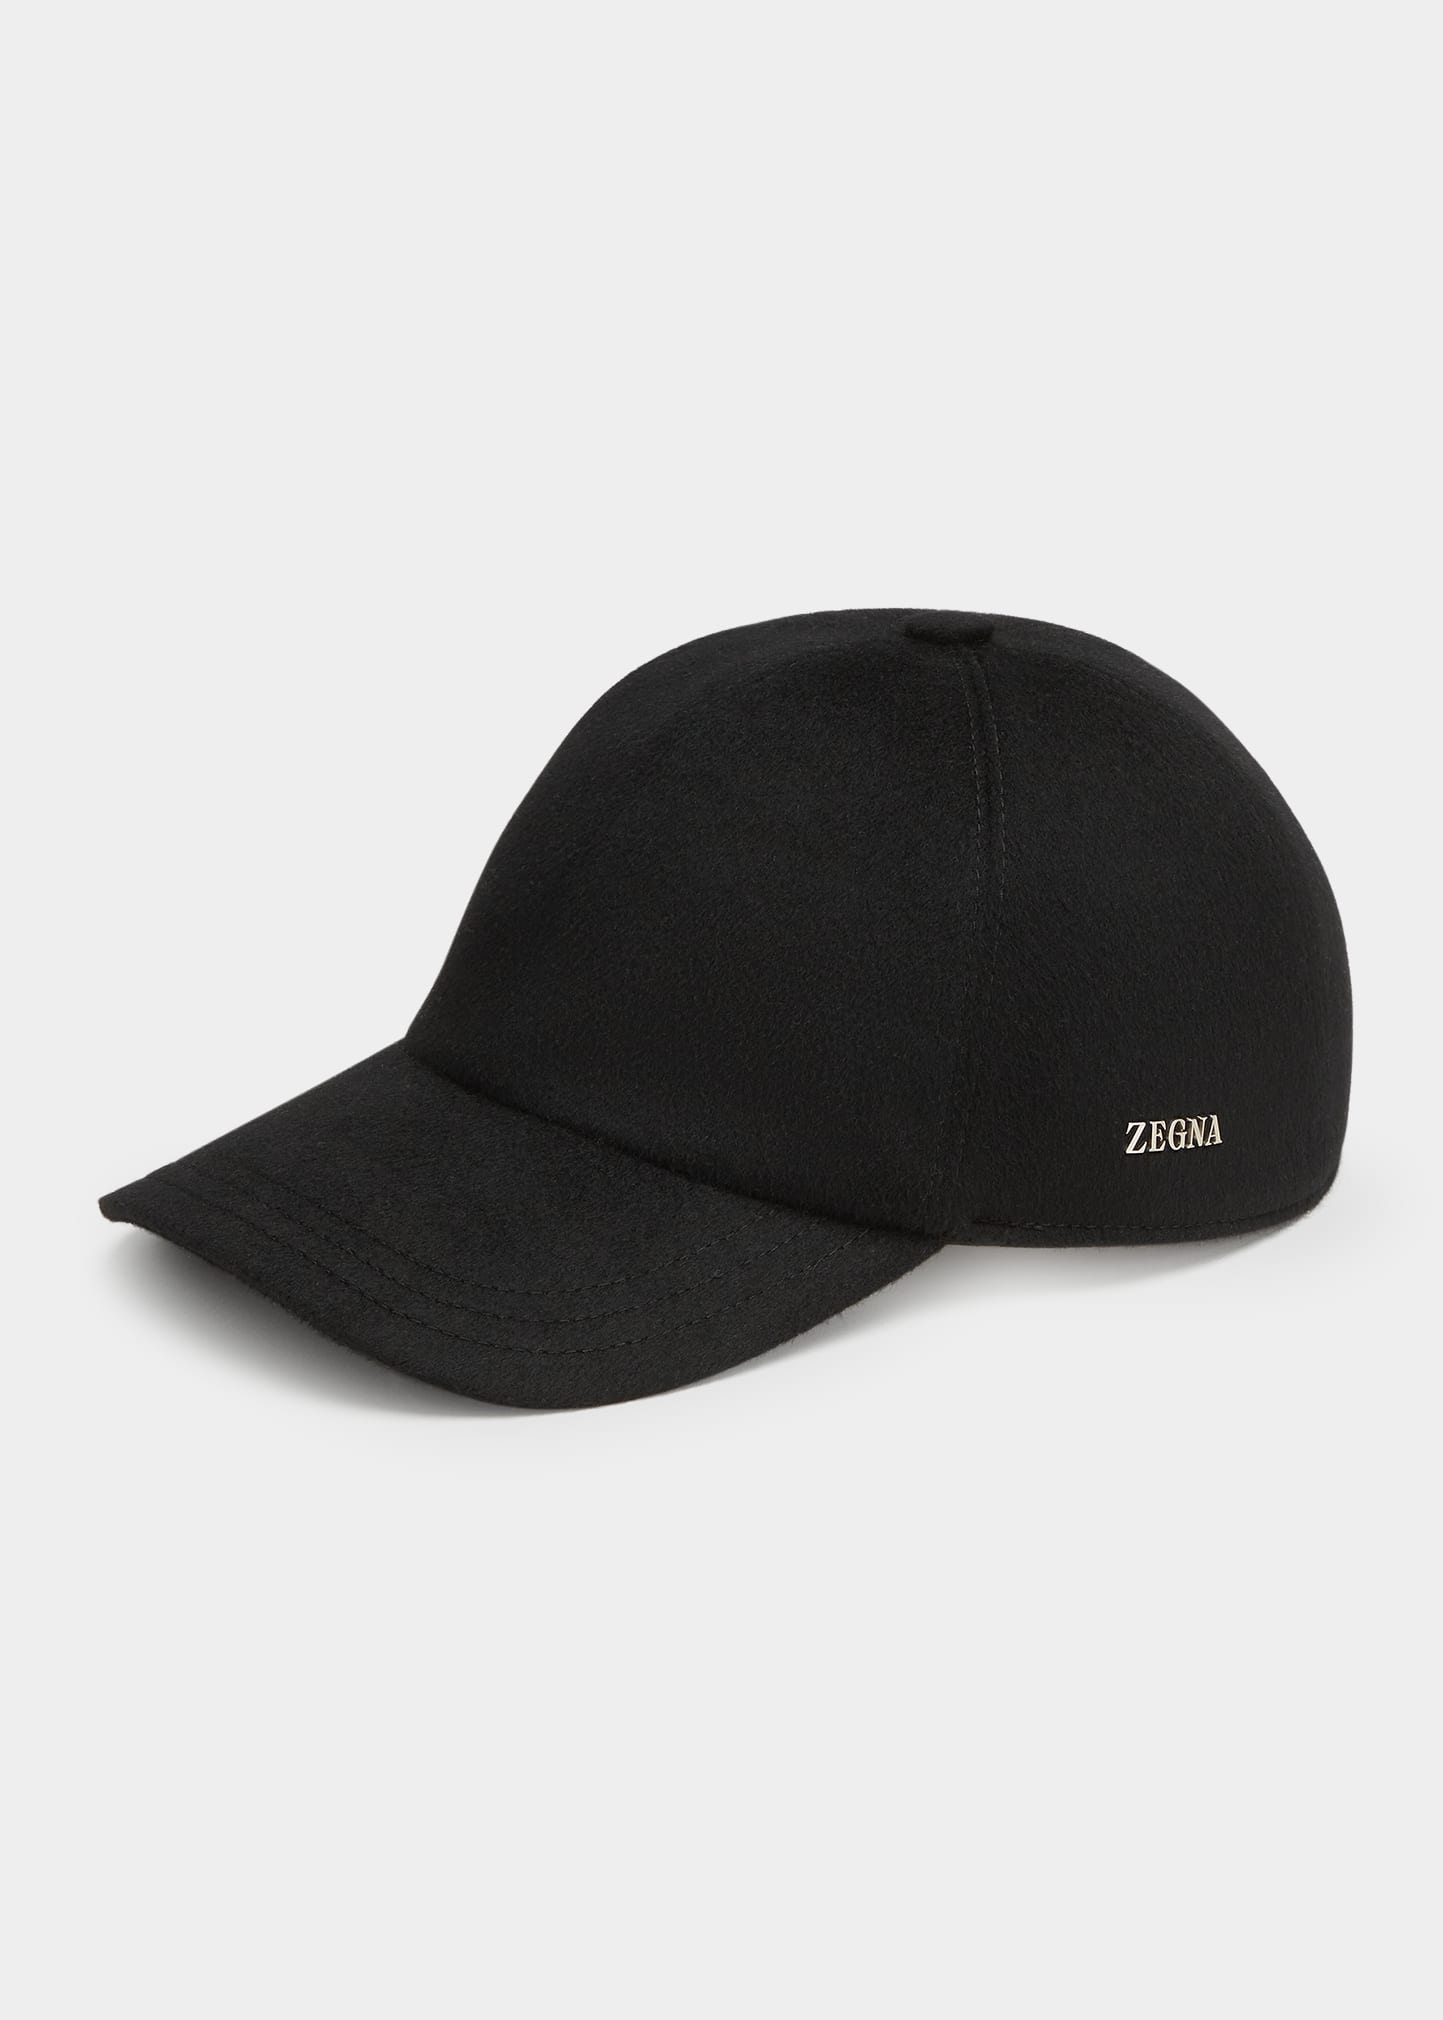 ZEGNA Men's Cashmere Baseball Hat